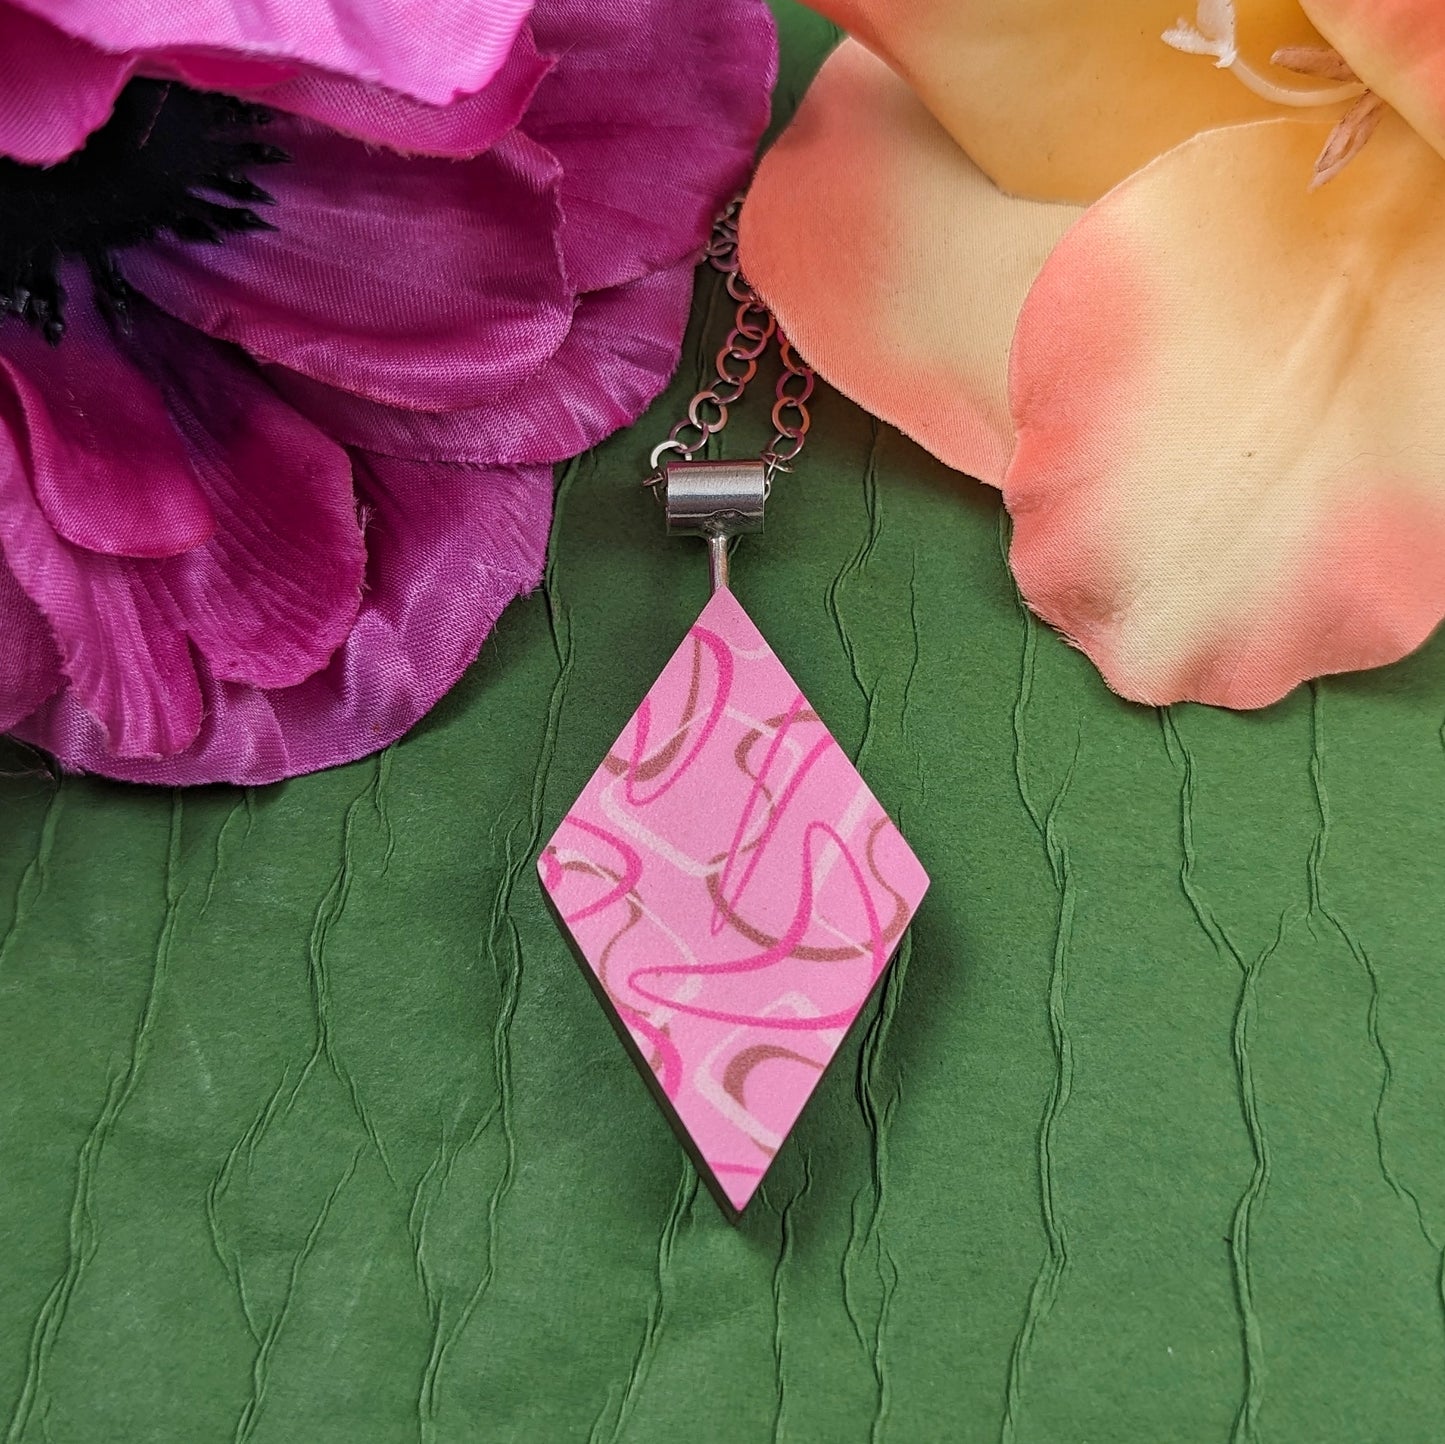 Diamond Shaped Laminate Necklace - Pink